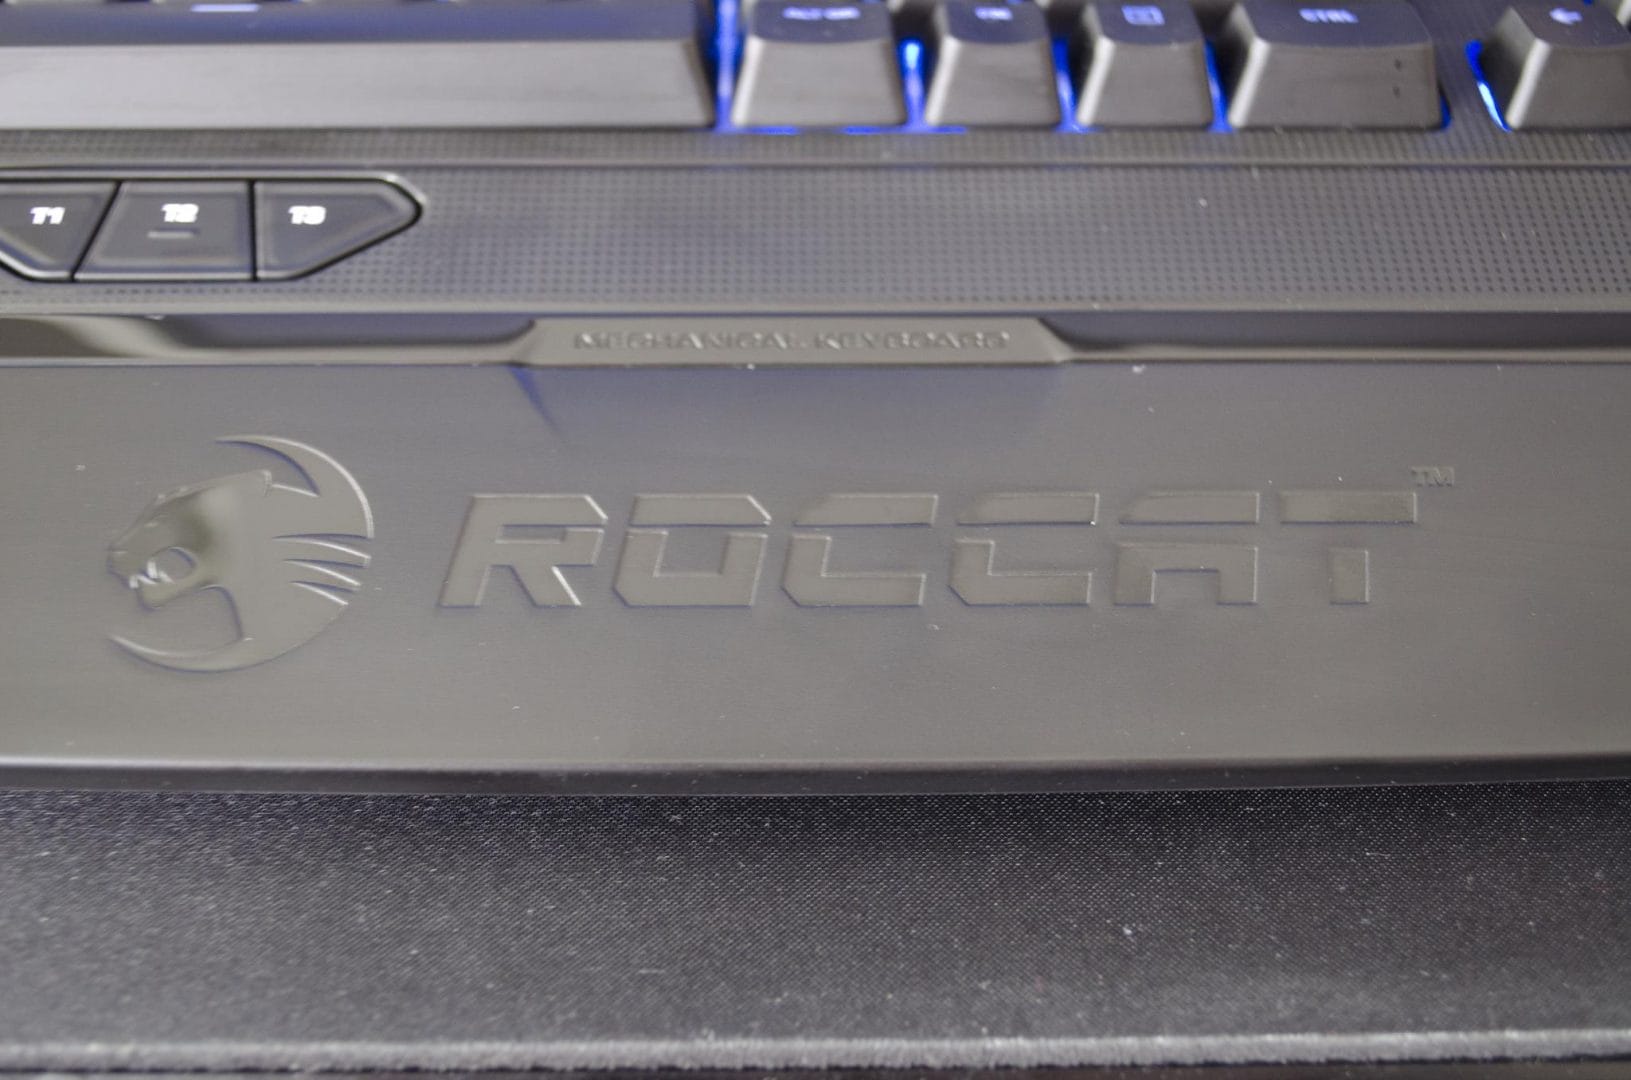 ROCCAT Ryos MK FX Mechanical Keyboard Review - EnosTech.com